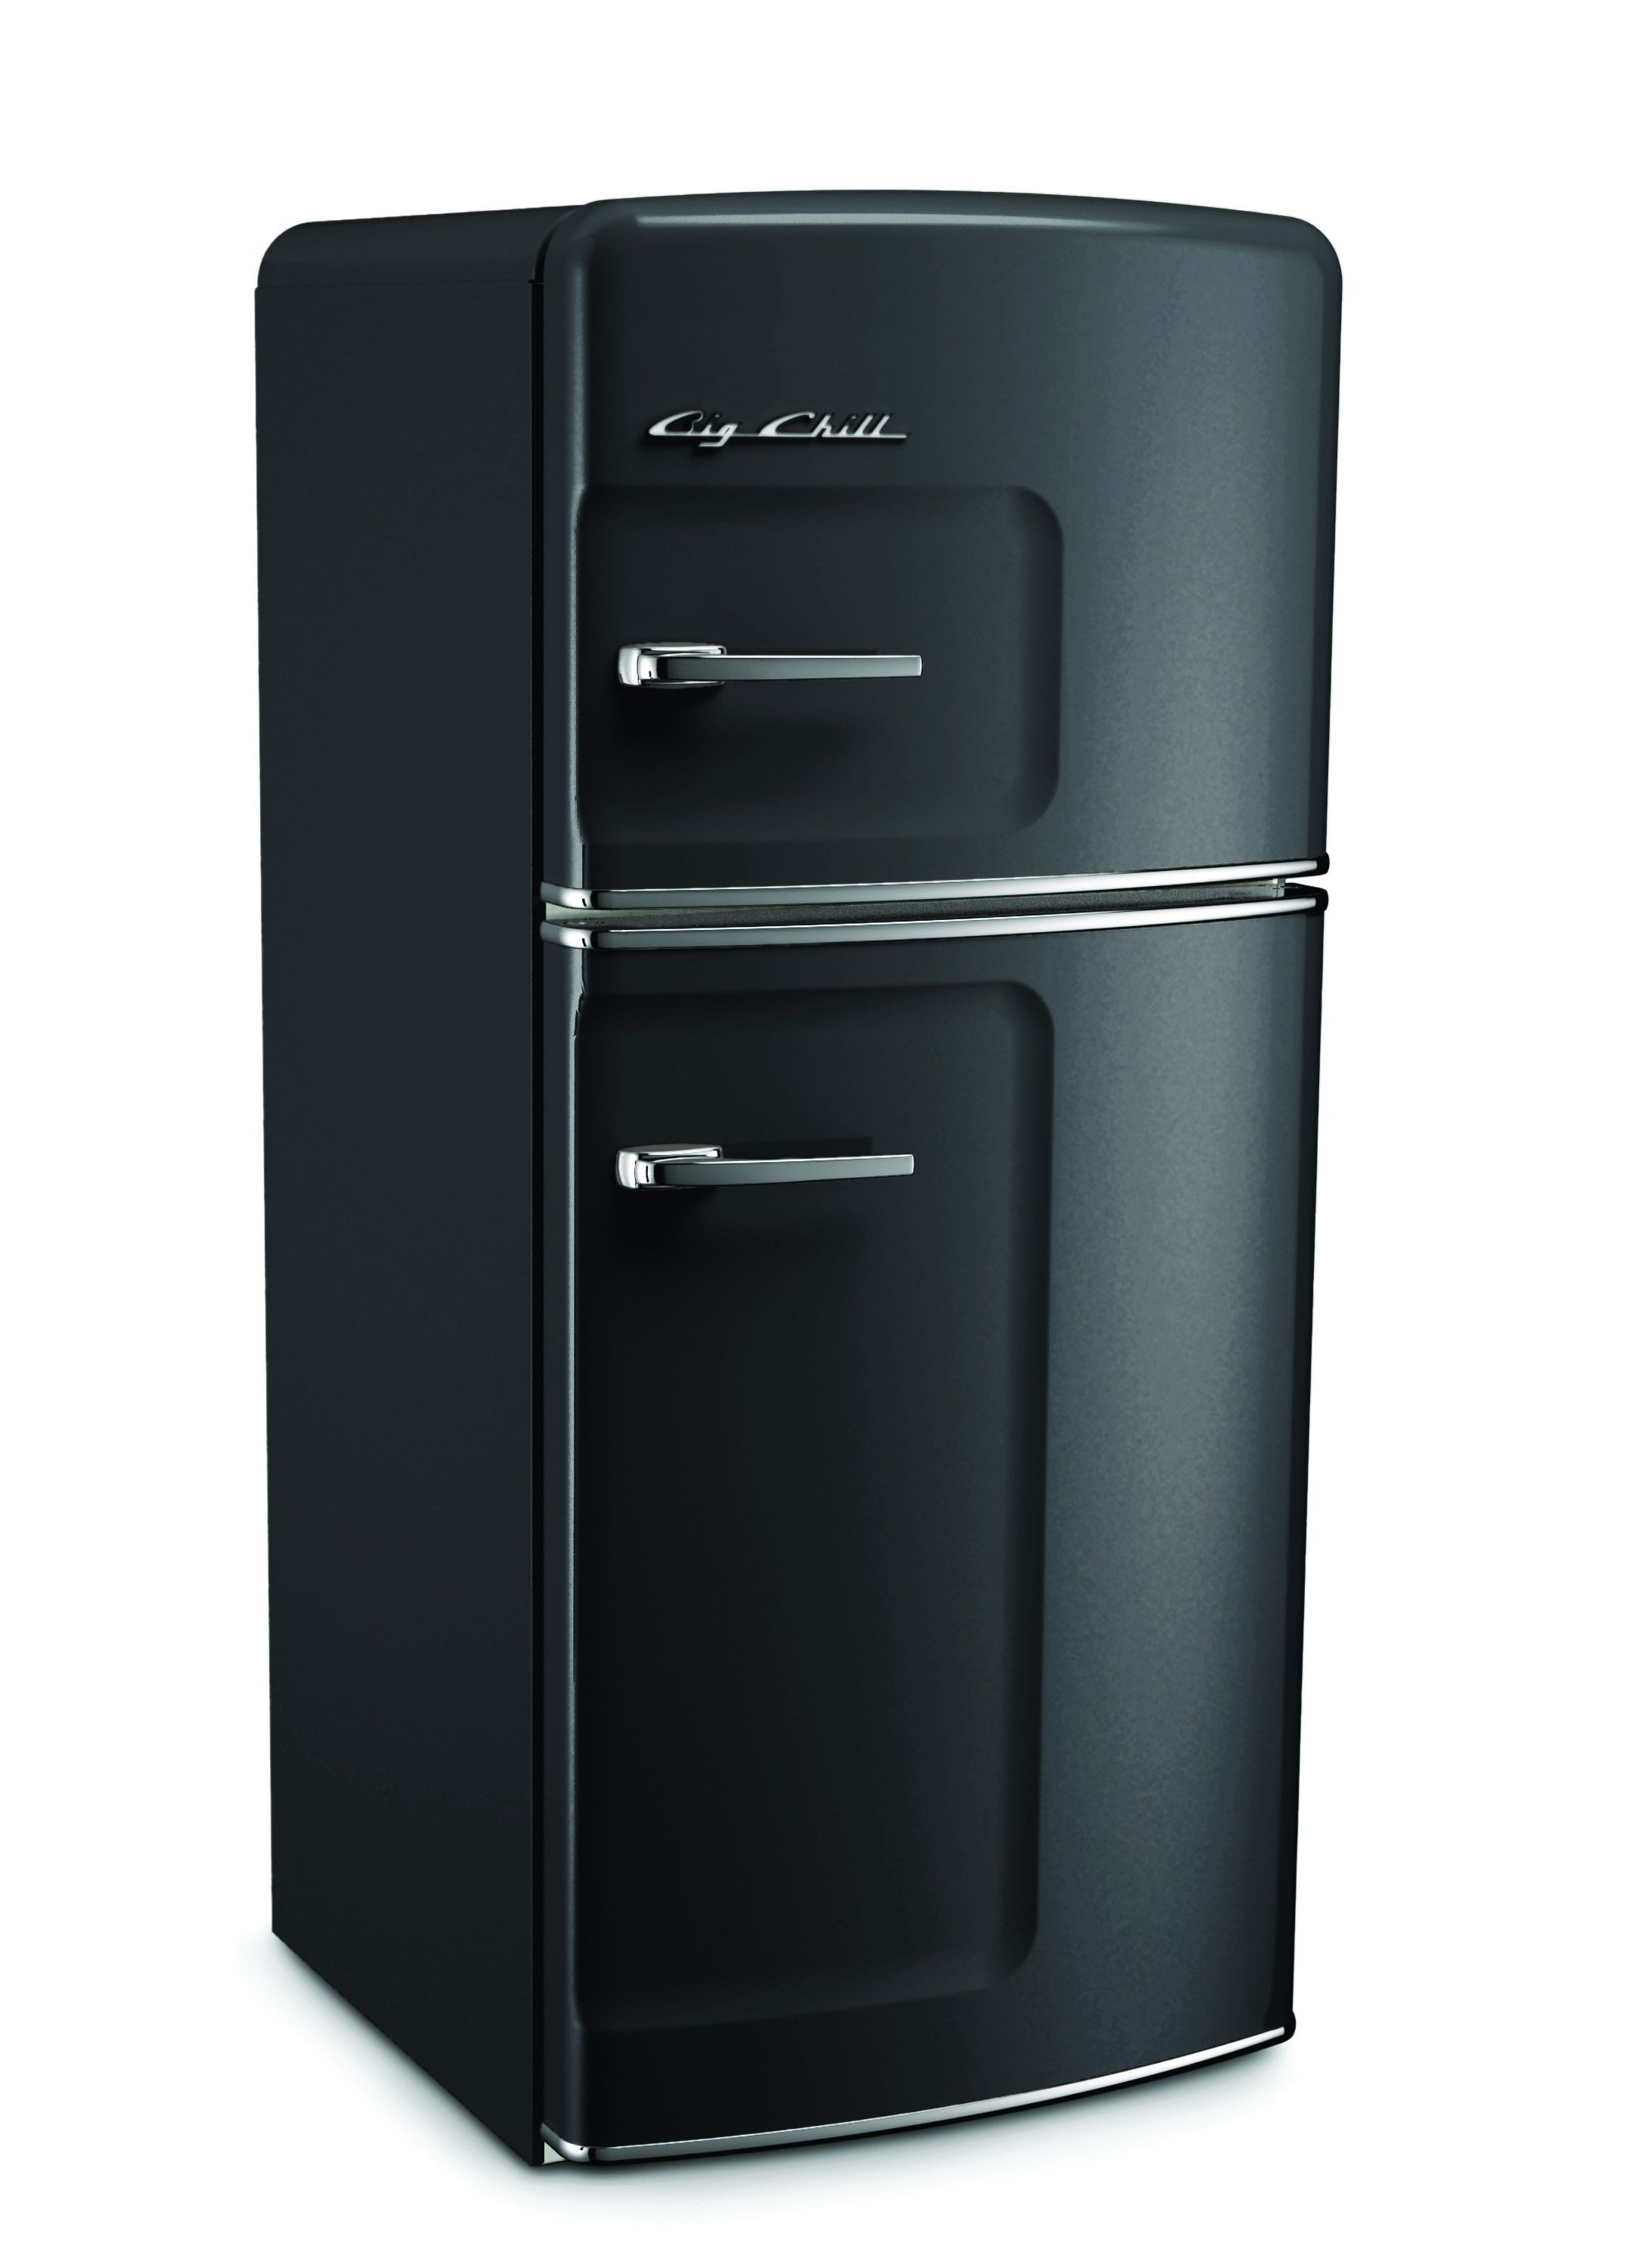 Retro compact fridge 24